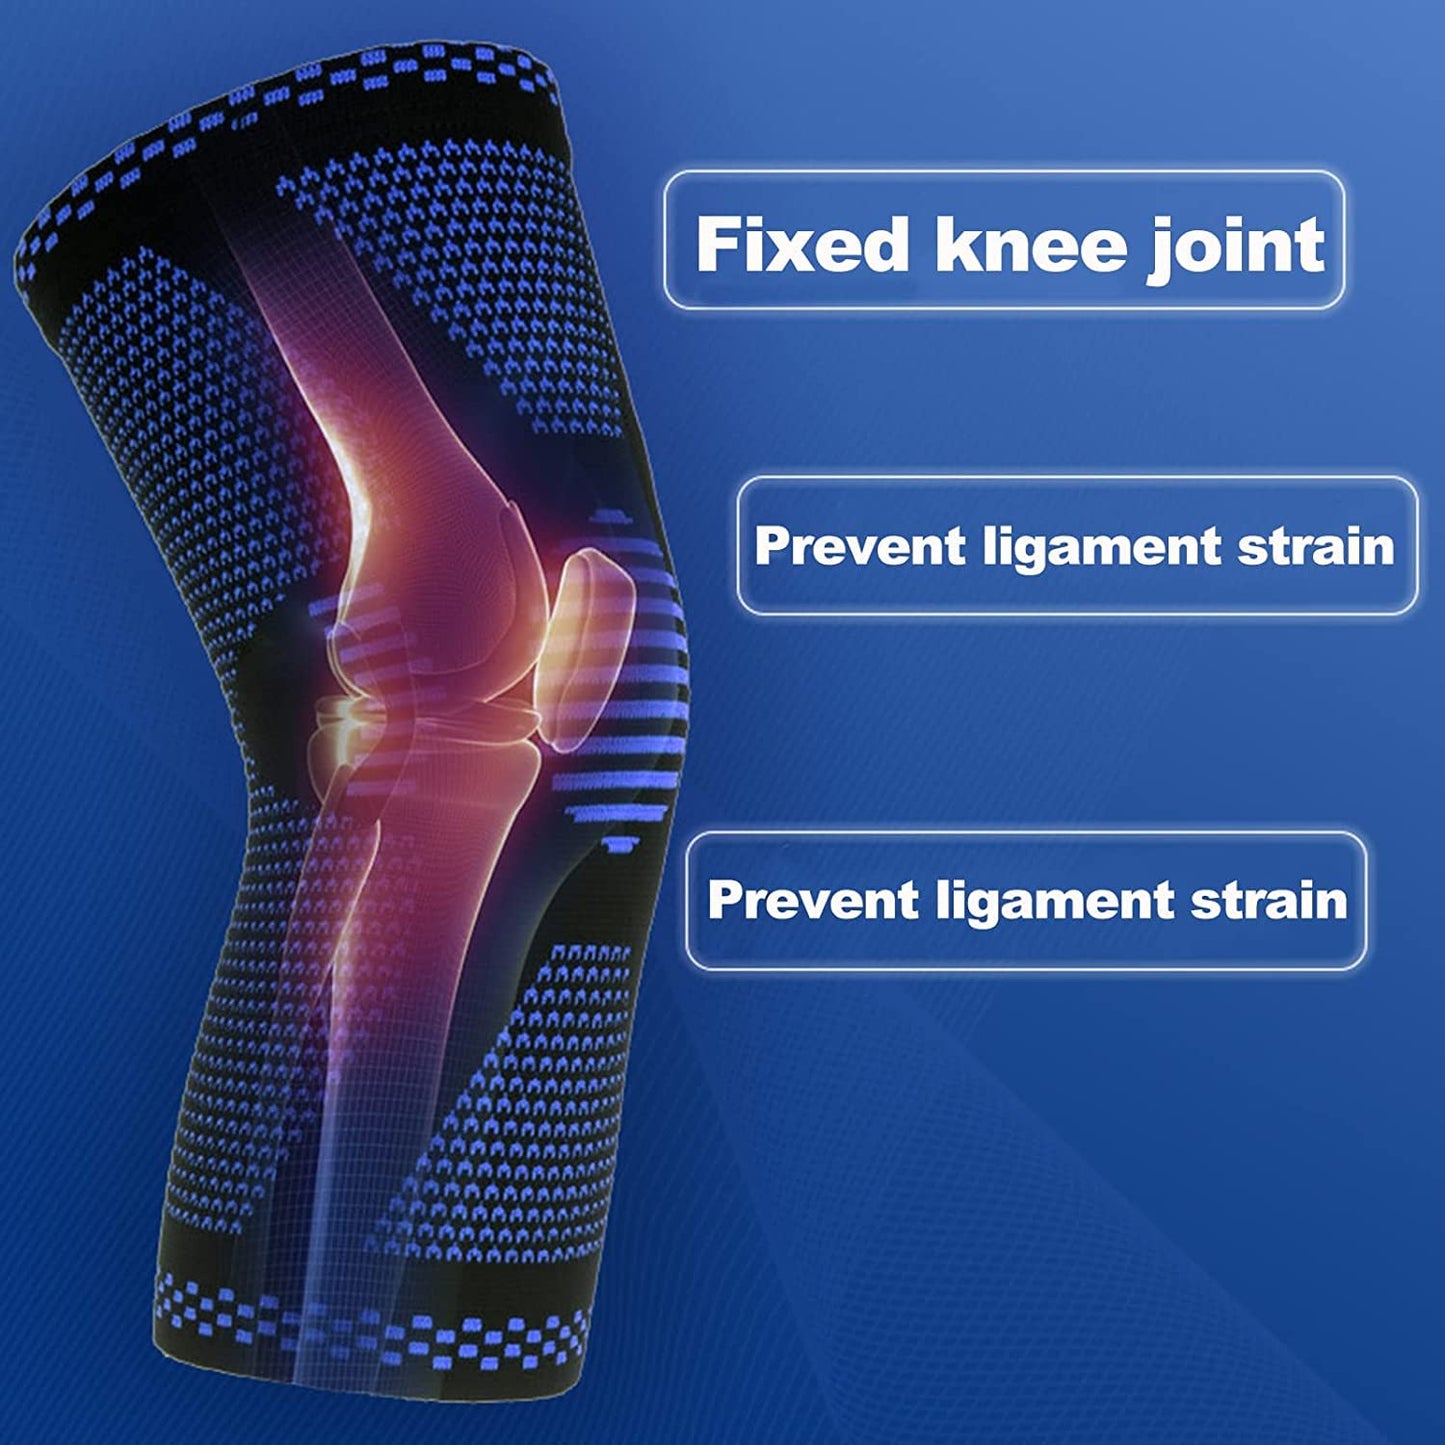 FlexFit™ Knee Support